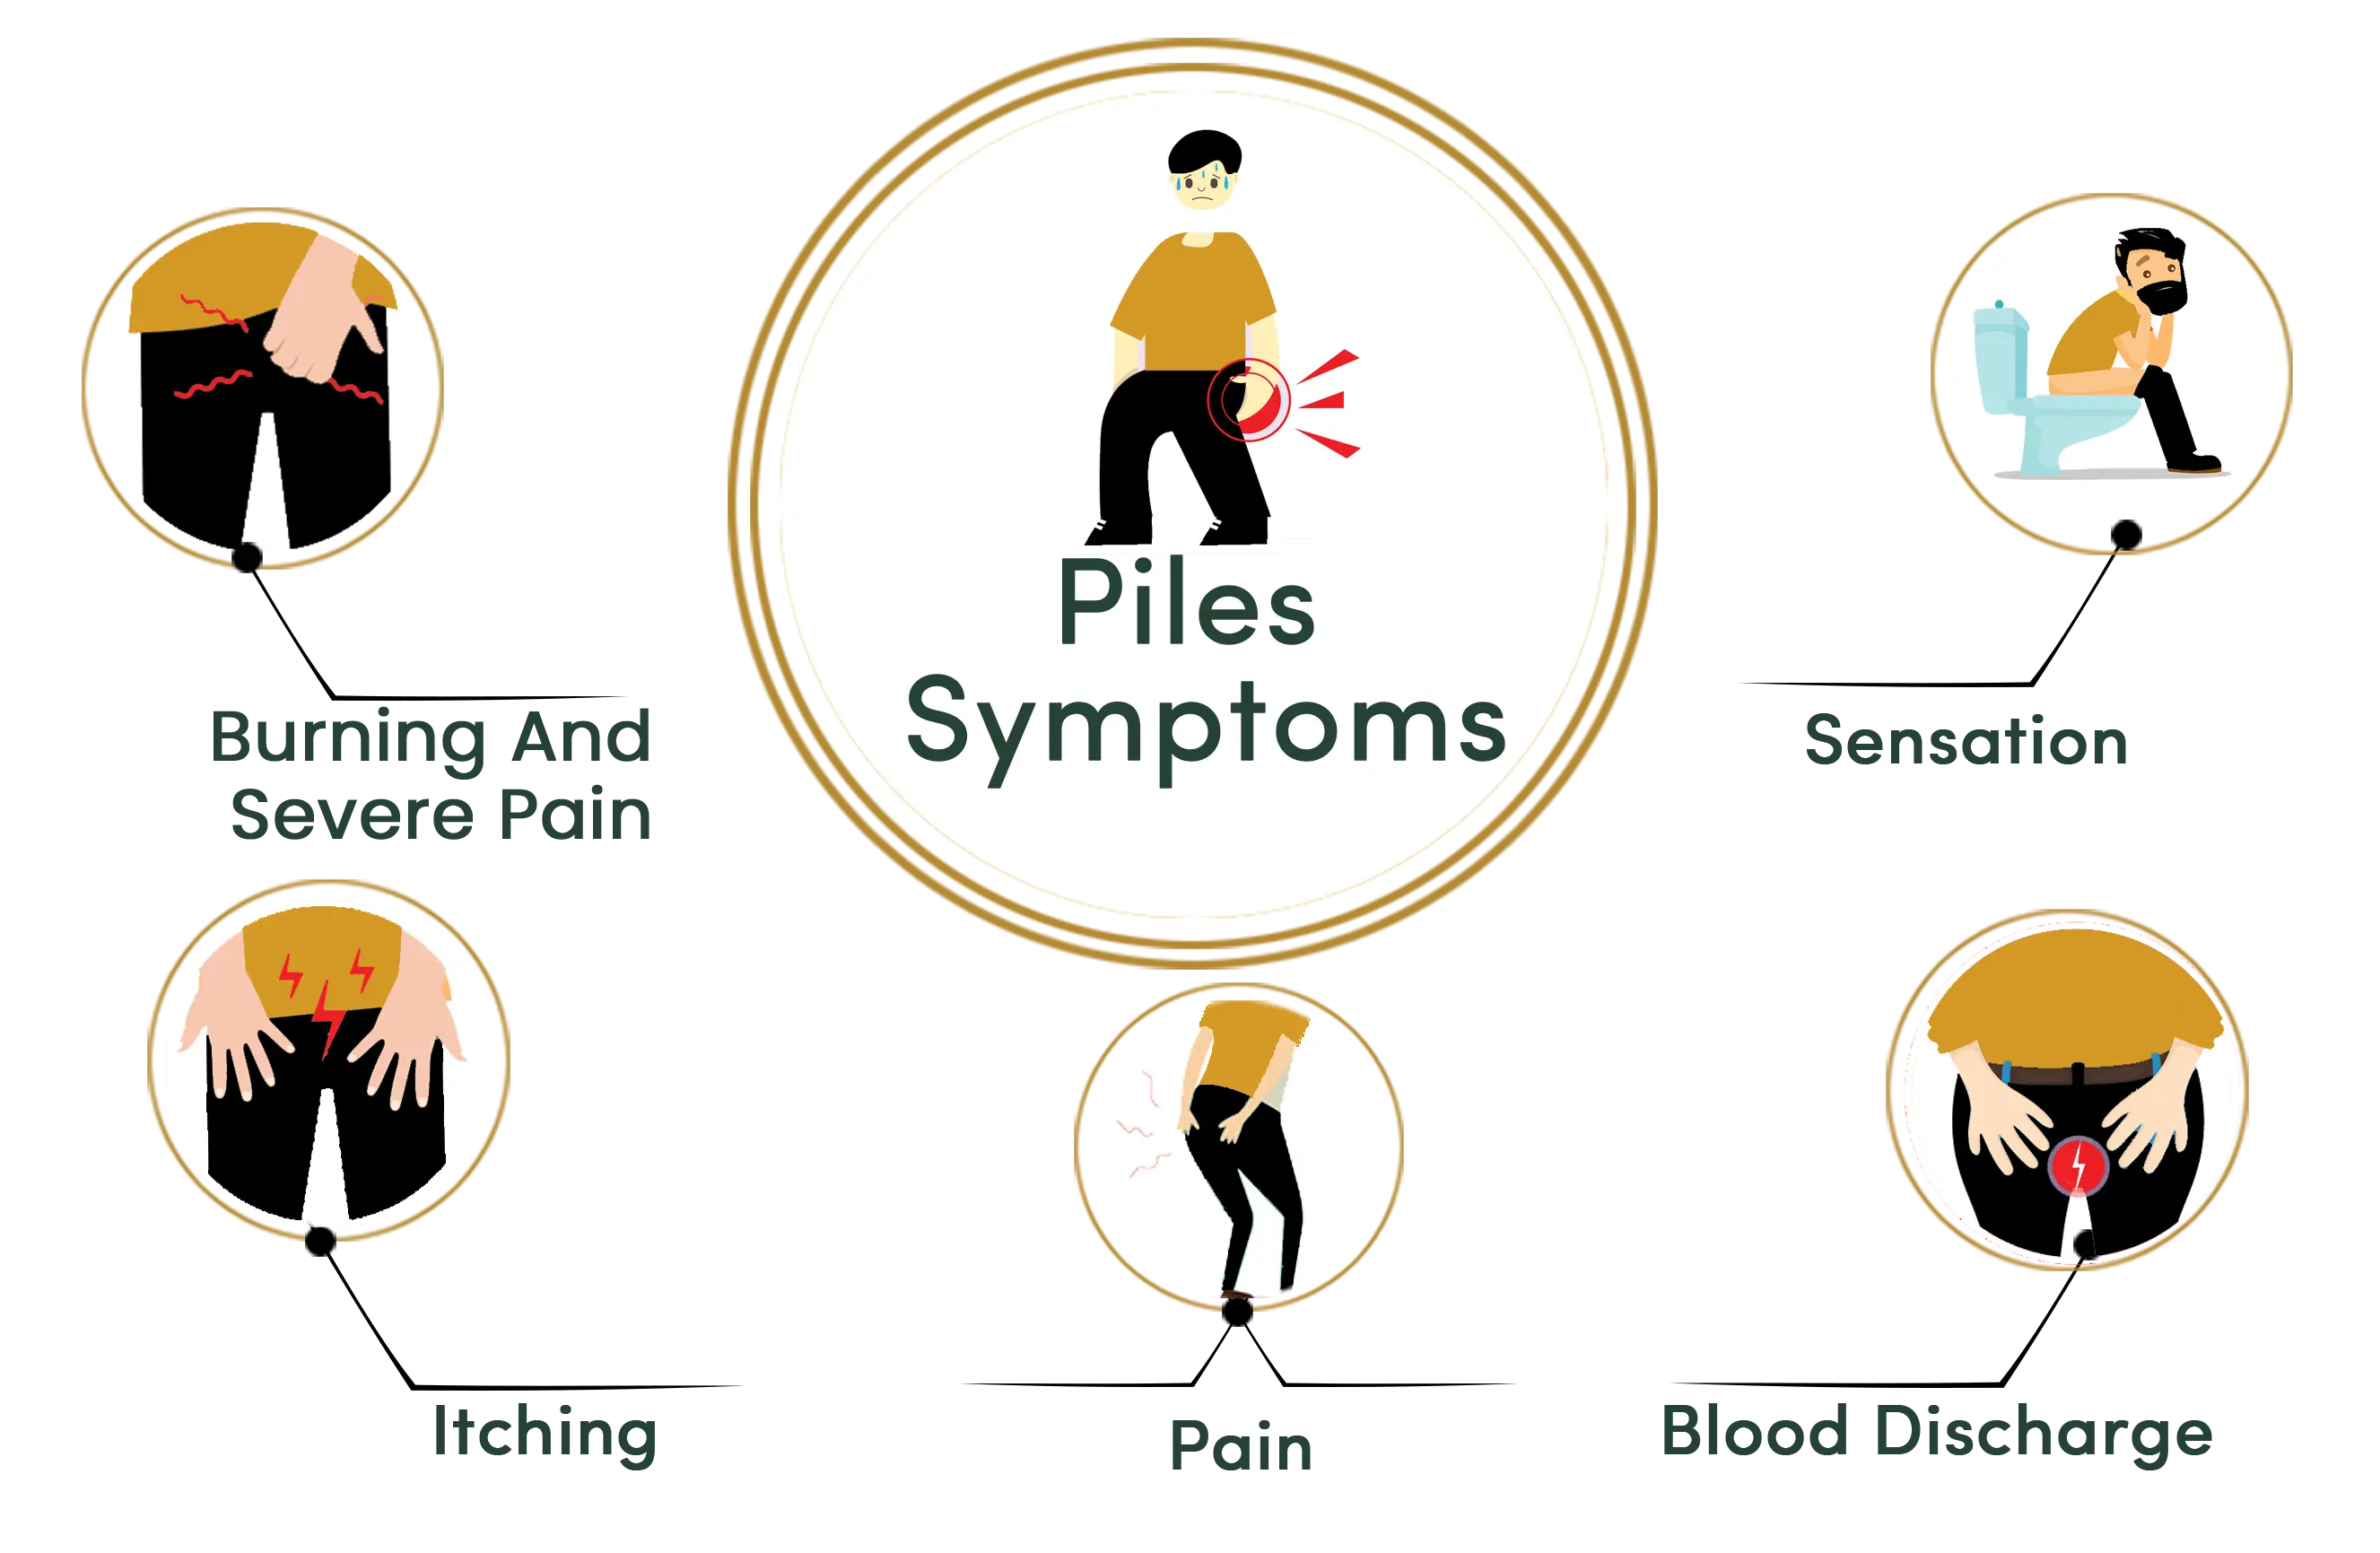 Piles symptoms